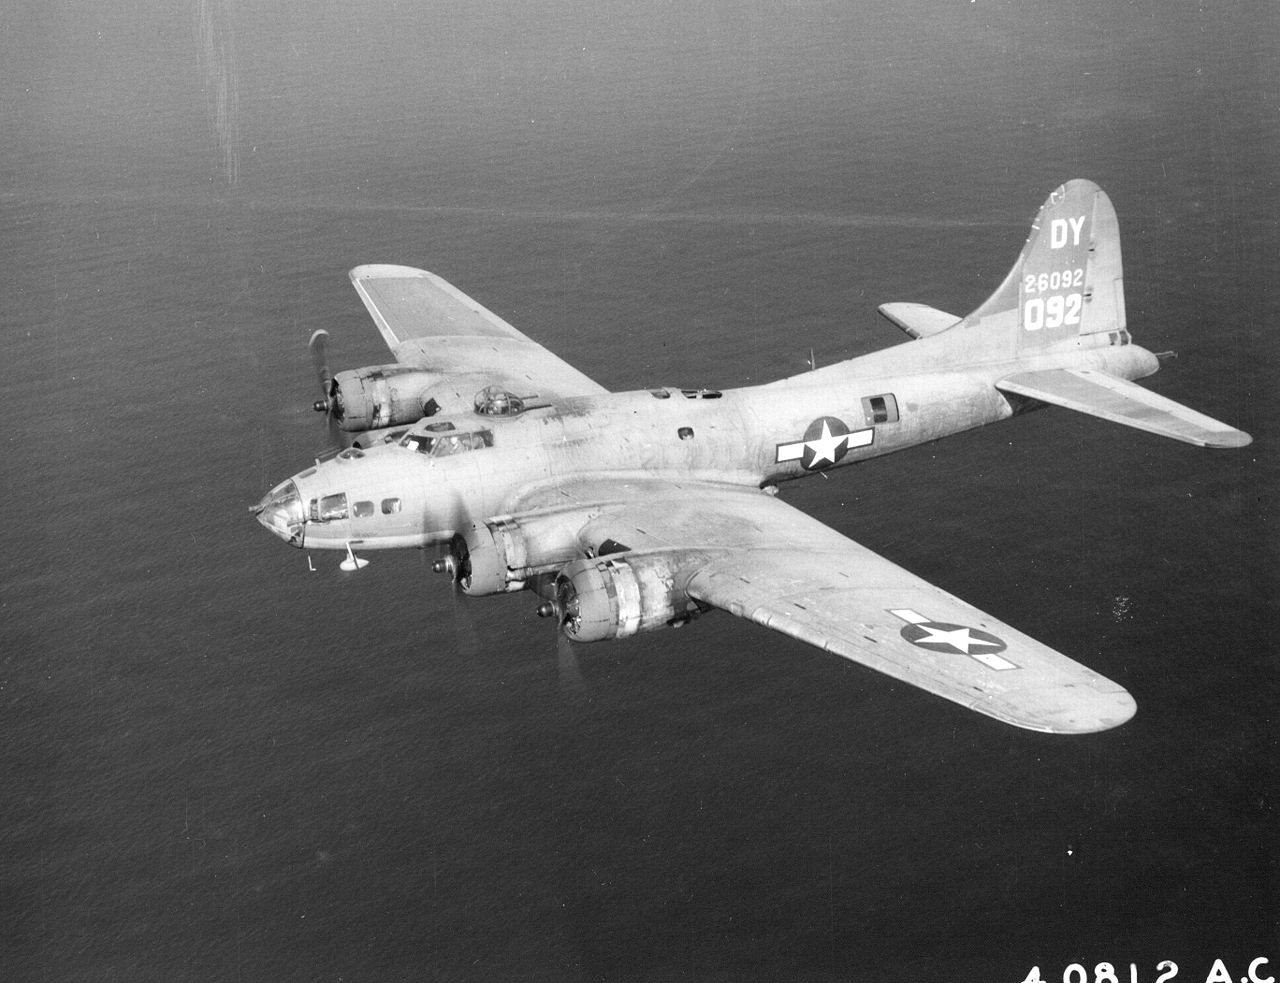  Flying B-29 Superfortress Pilot Phonetic Alphabet